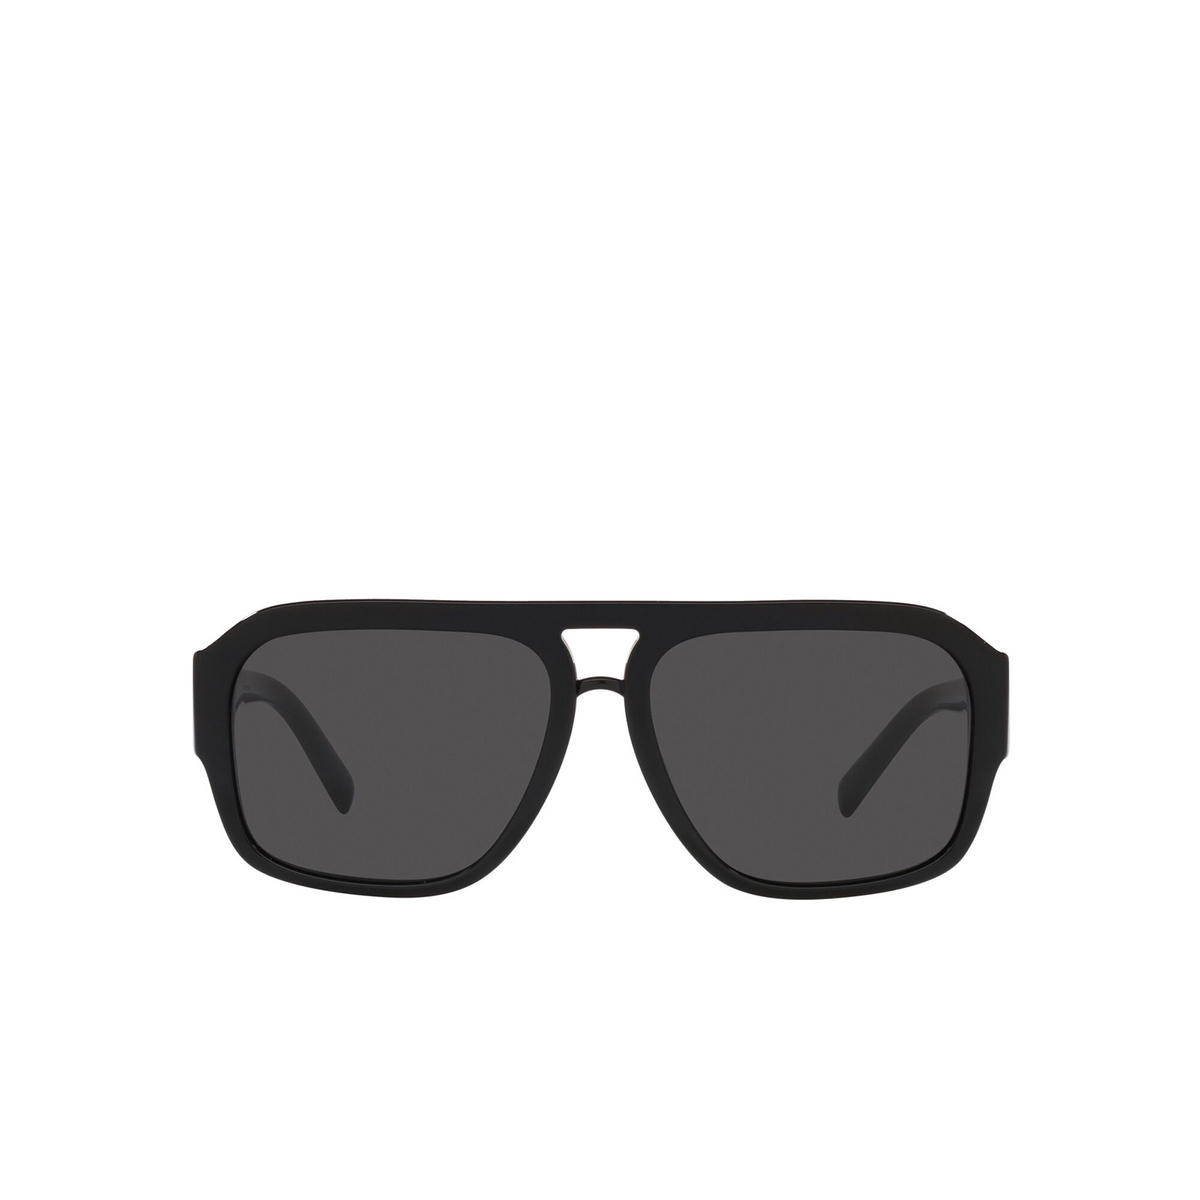 Dolce & Gabbana DG4403 Sunglasses 501/87 Black - front view